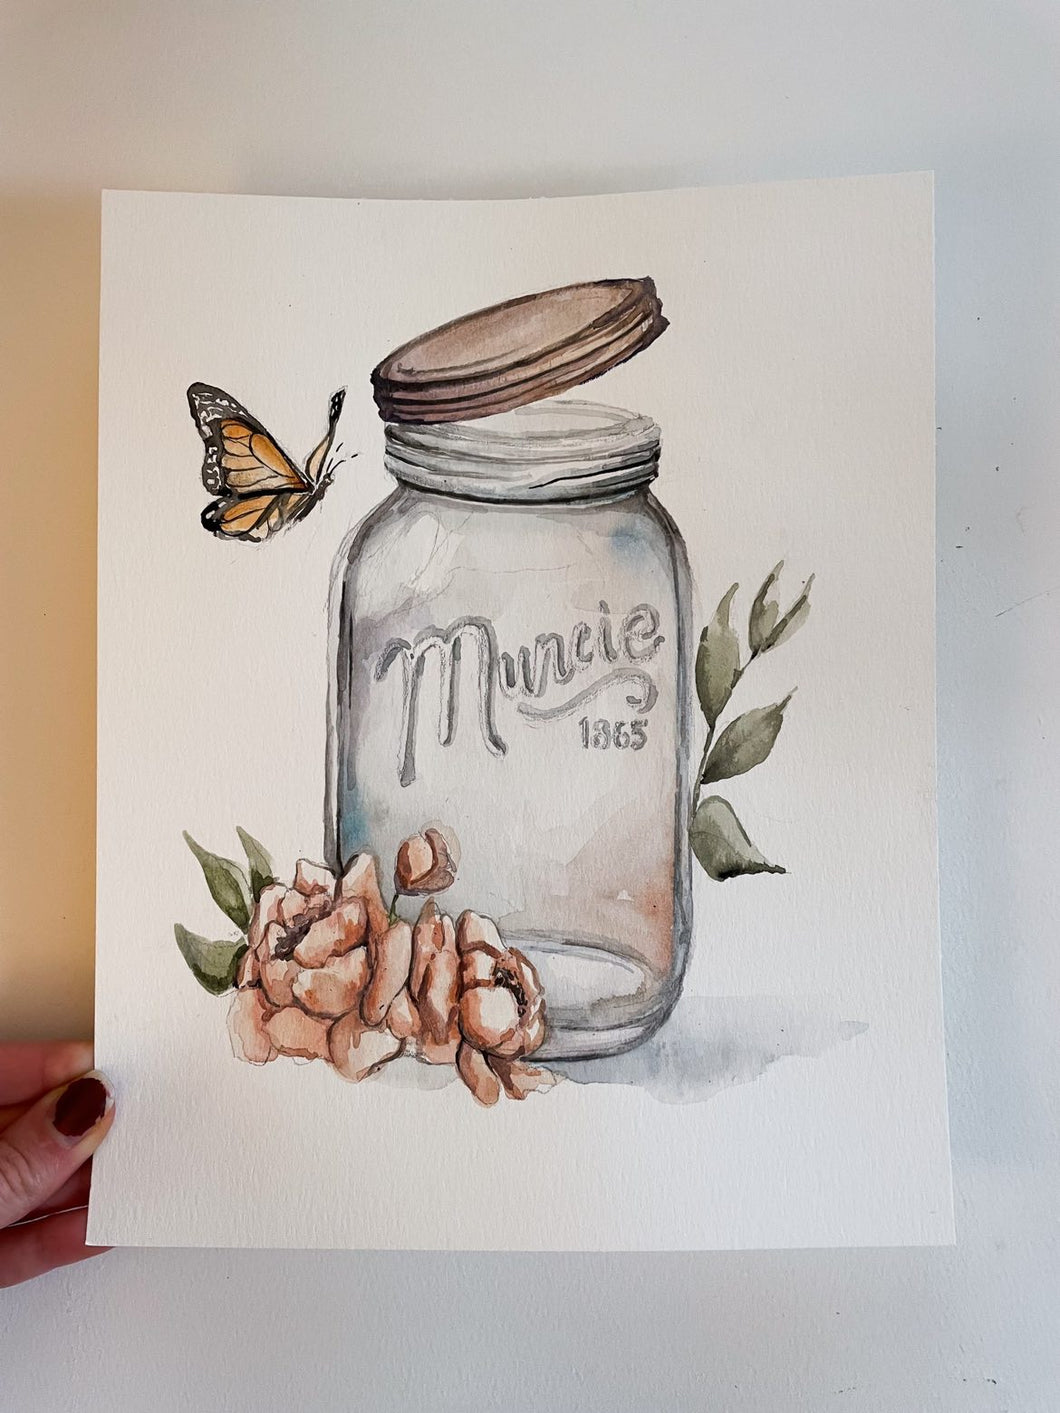 Muncie Ball Jar - Watercolor Print by Emily Winslow